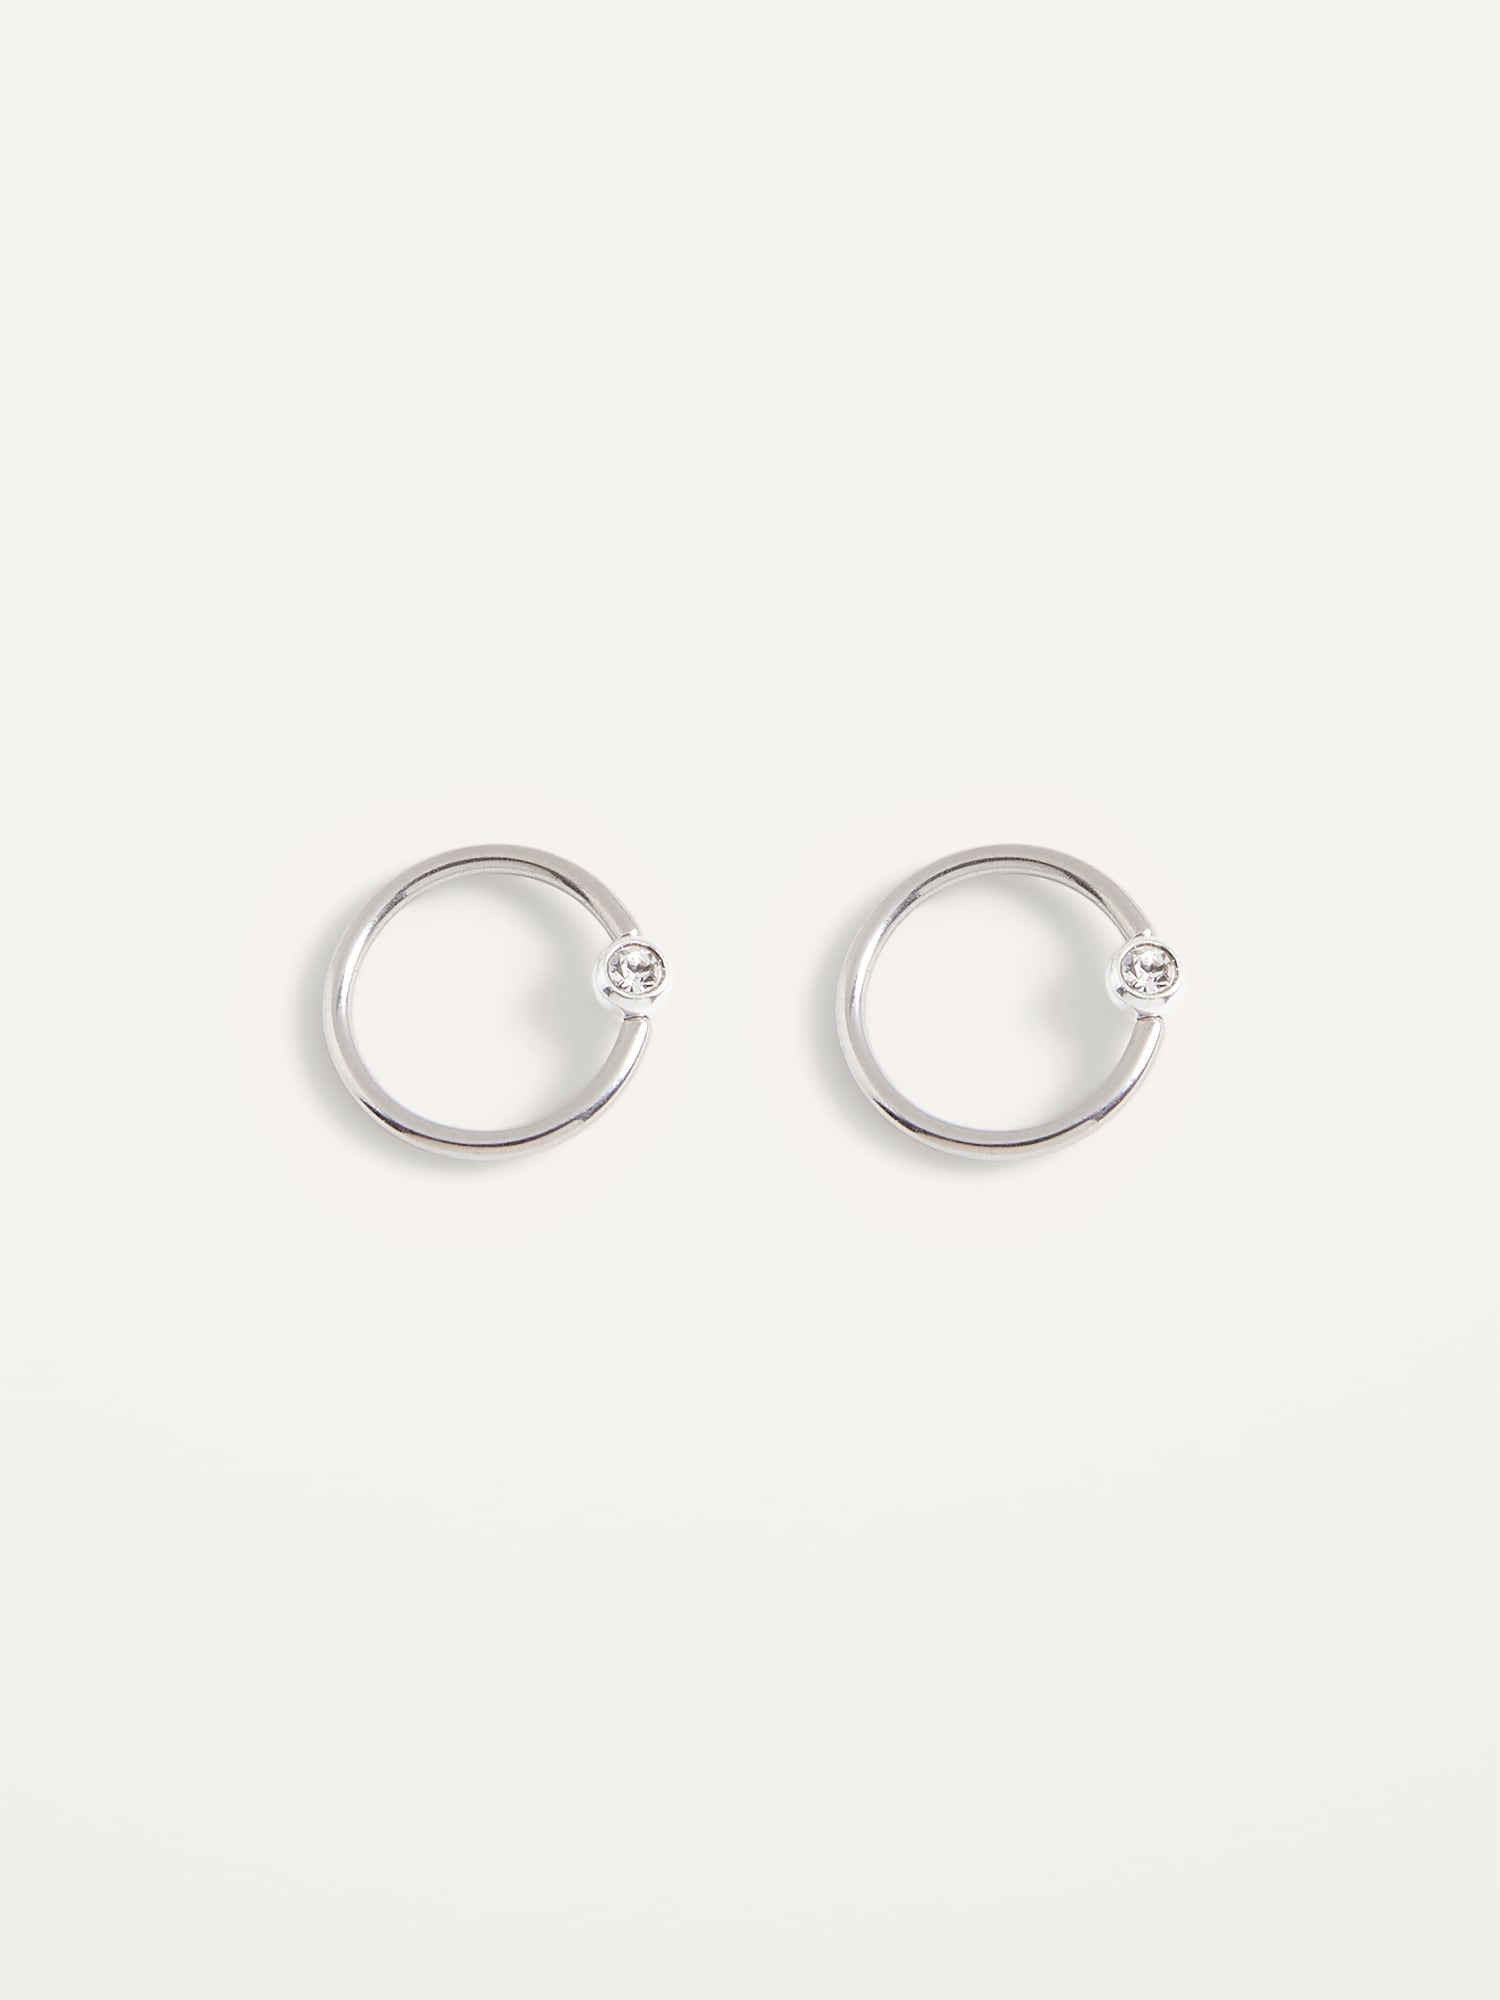 Womens Flower Sterling Silver Cartilage Earrings Clip On Earrings for –  igemstonejewelry